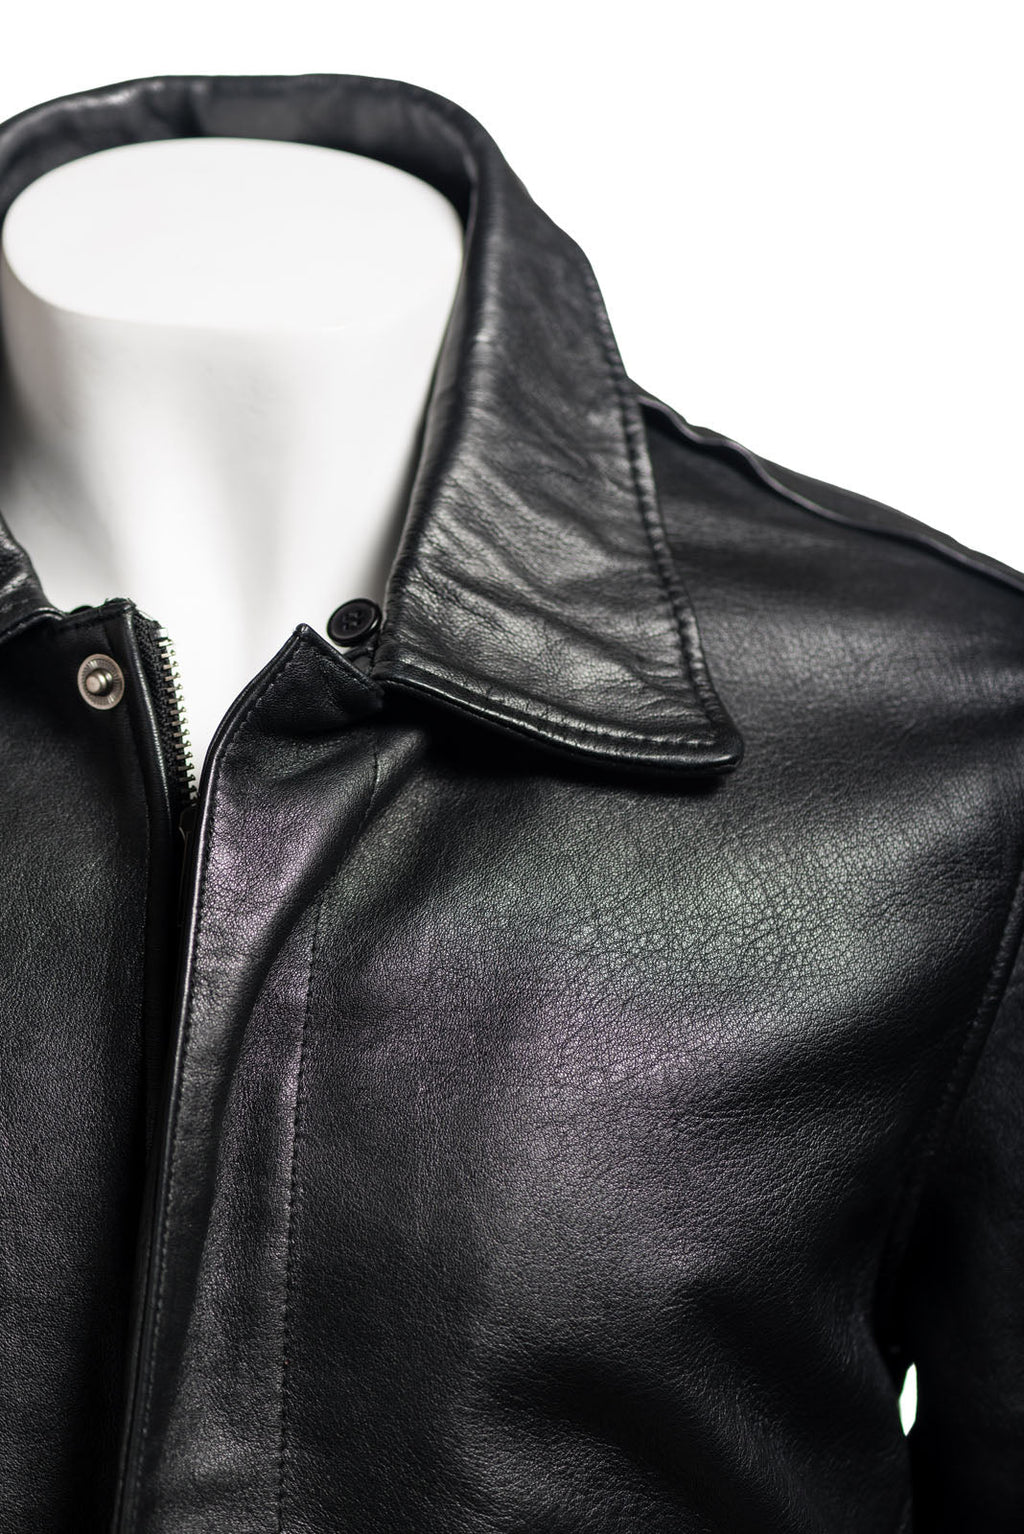 Men's Black Aviator Pilot Flight A2 Style Leather Jacket with Detachable Real Sheepskin Collar: Maurizio